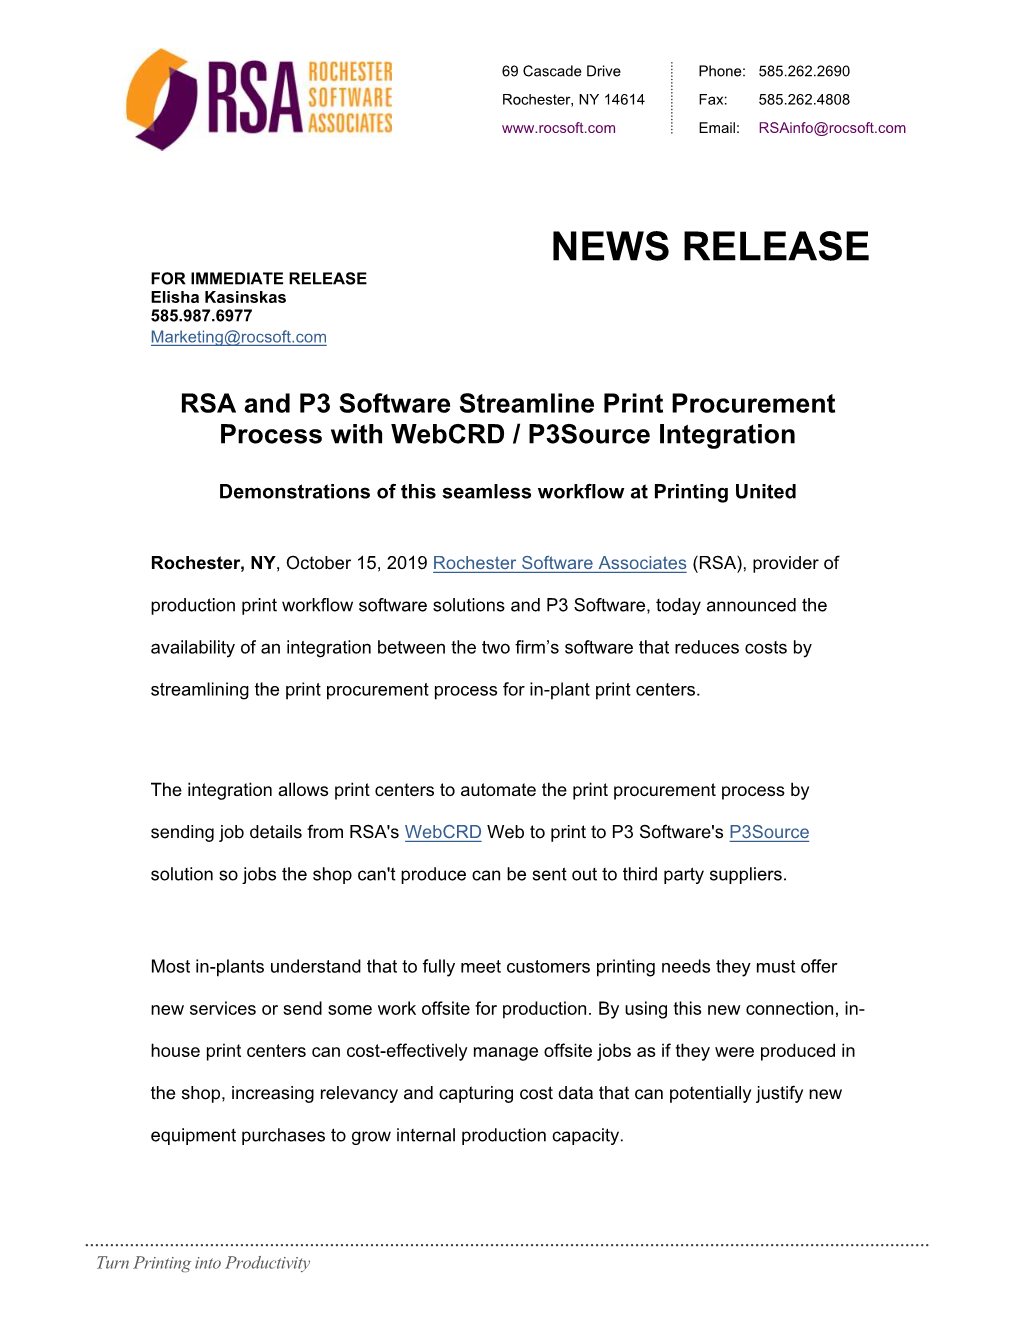 P3 Software and RSA Streamline Print Procurement Process